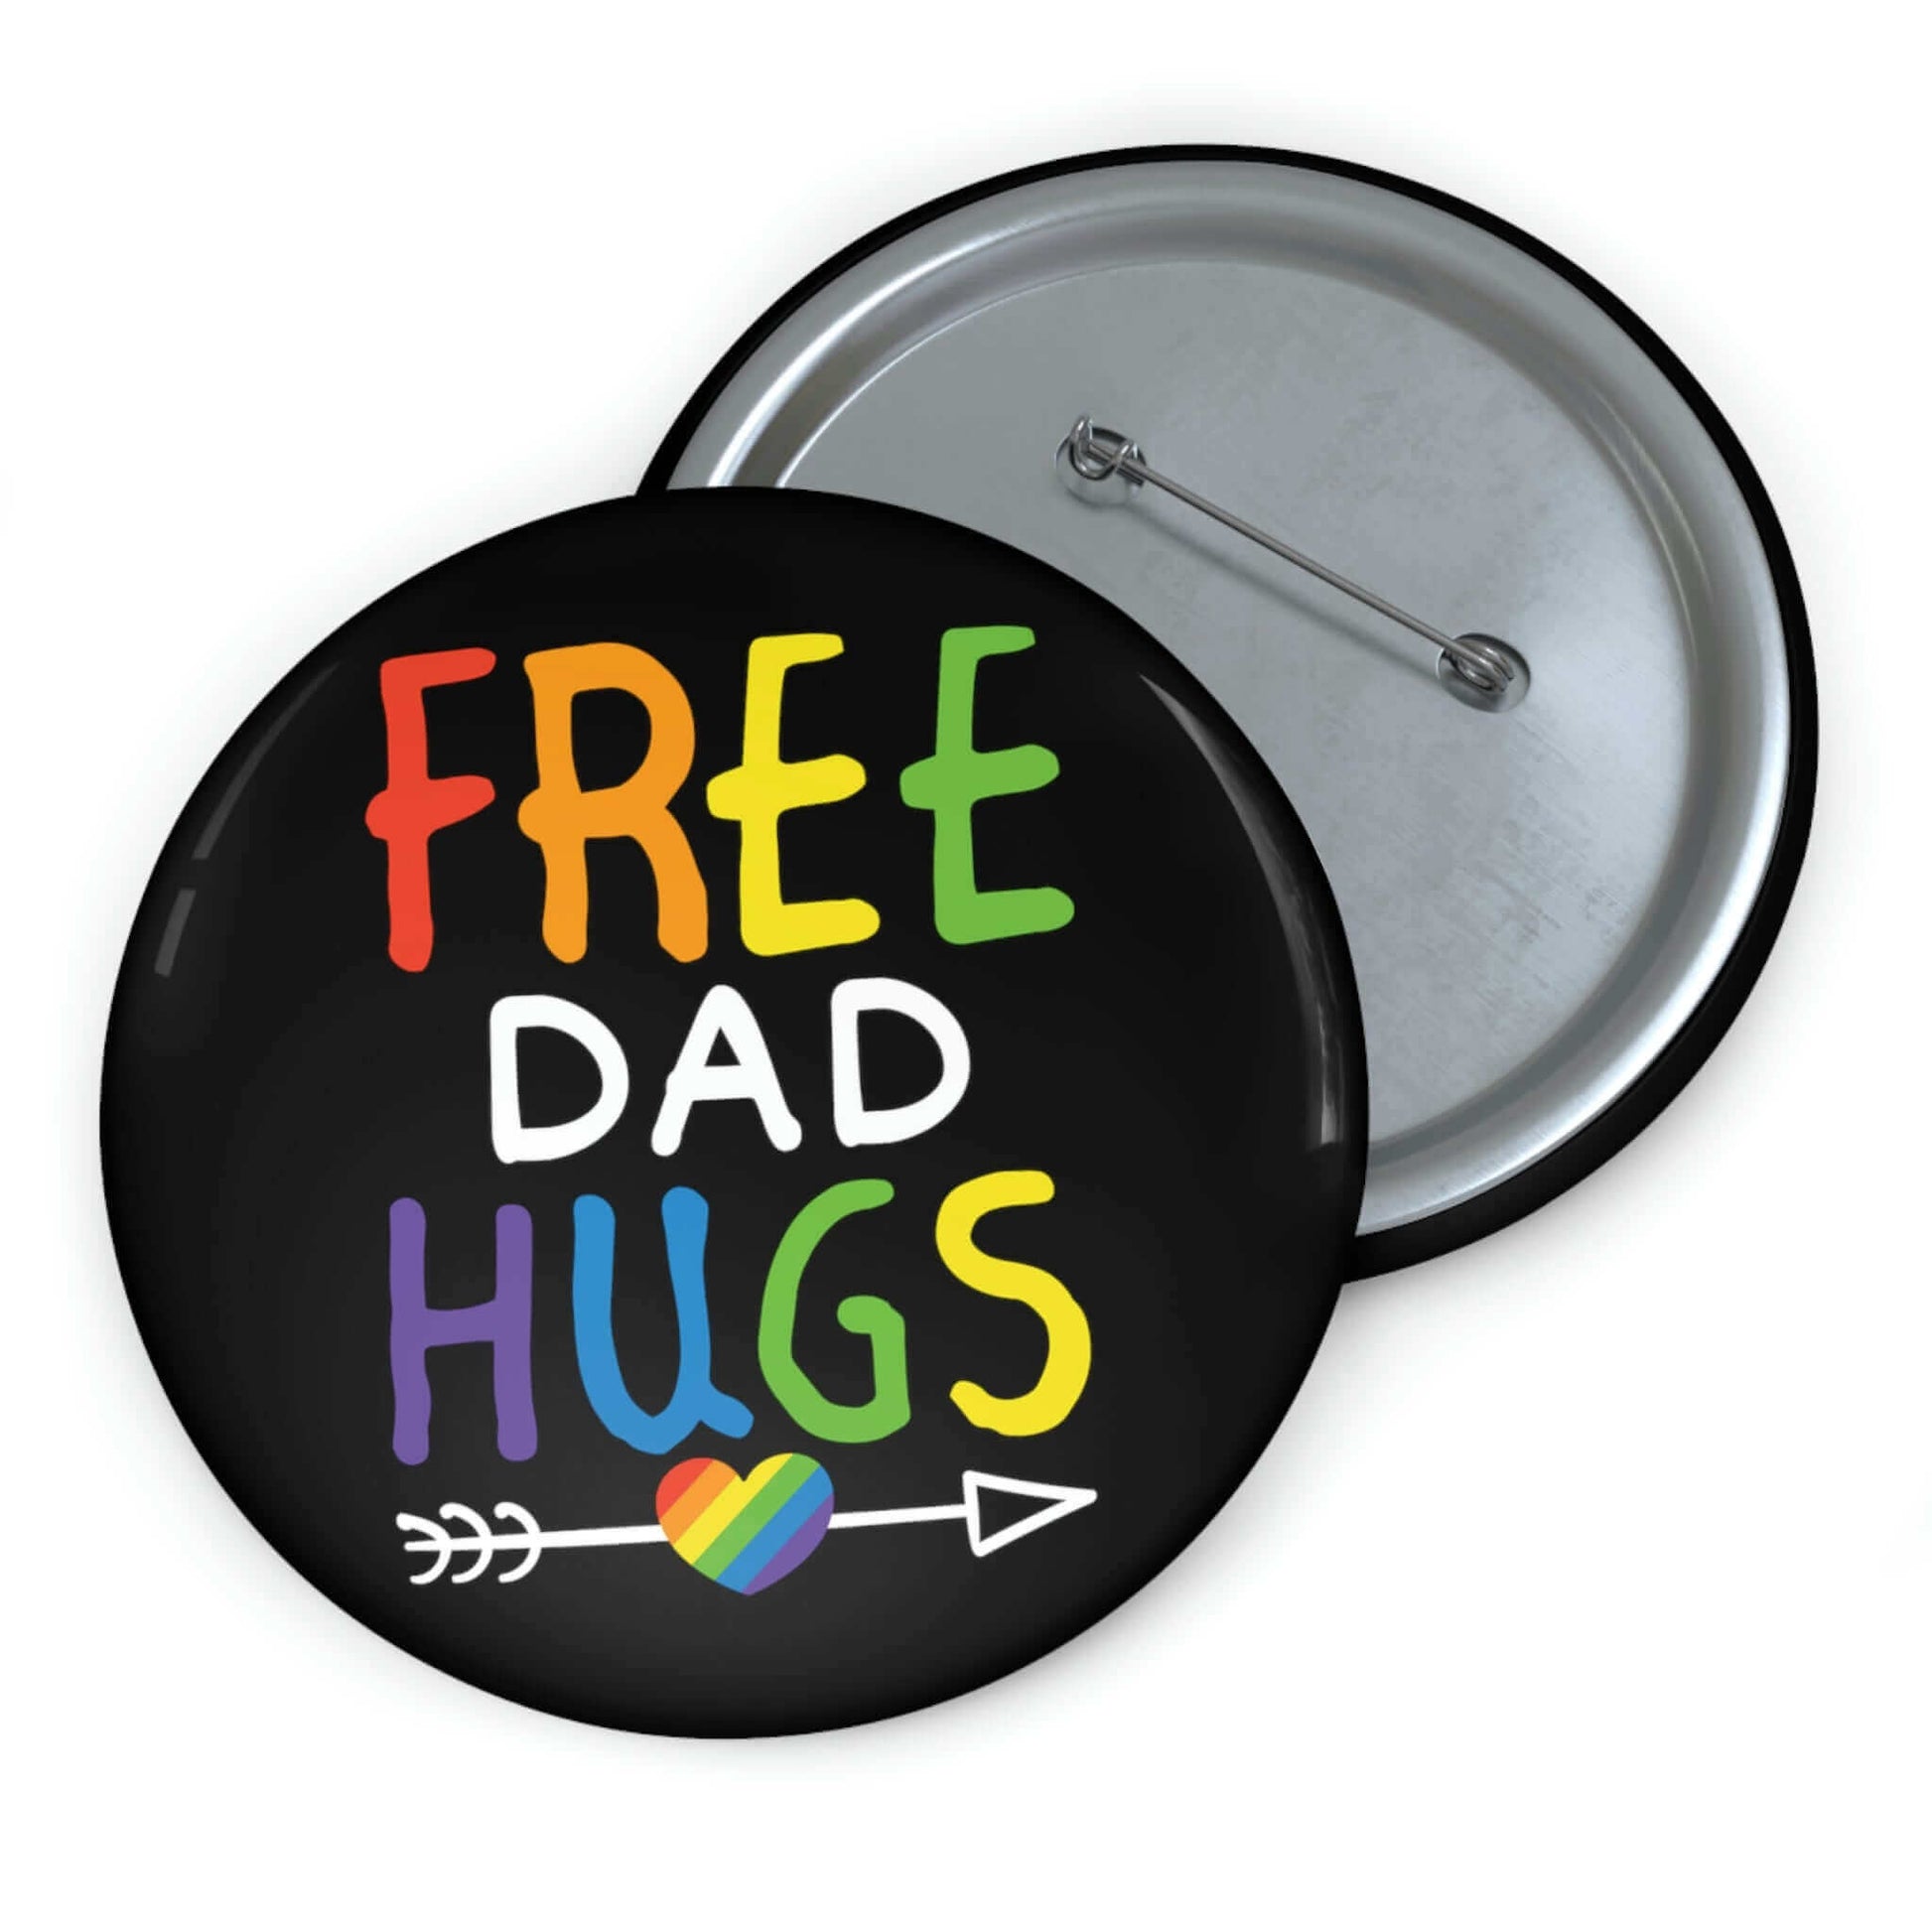 Free Dad hugs rainbow pride LGBTQA ally support pinback button.